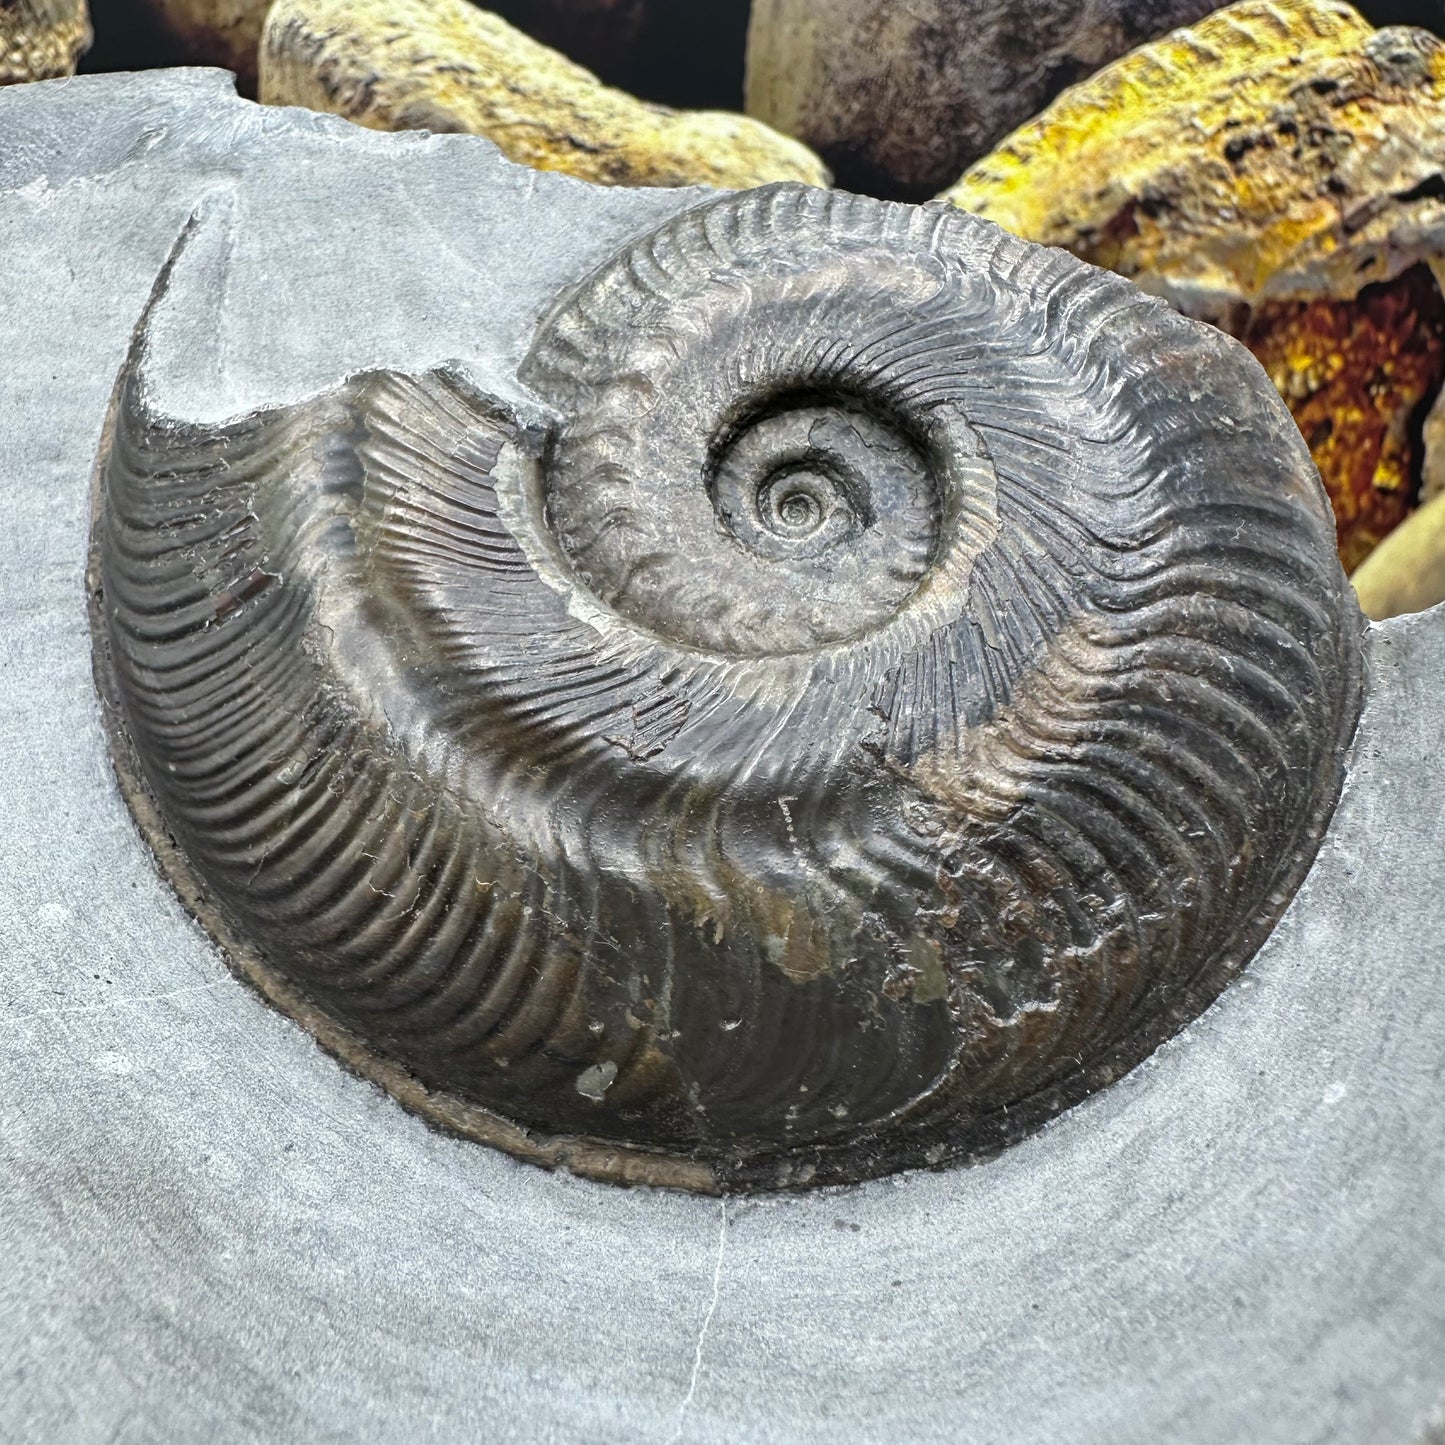 Harpoceras ammonite fossil - Whitby, North Yorkshire Jurassic Coast